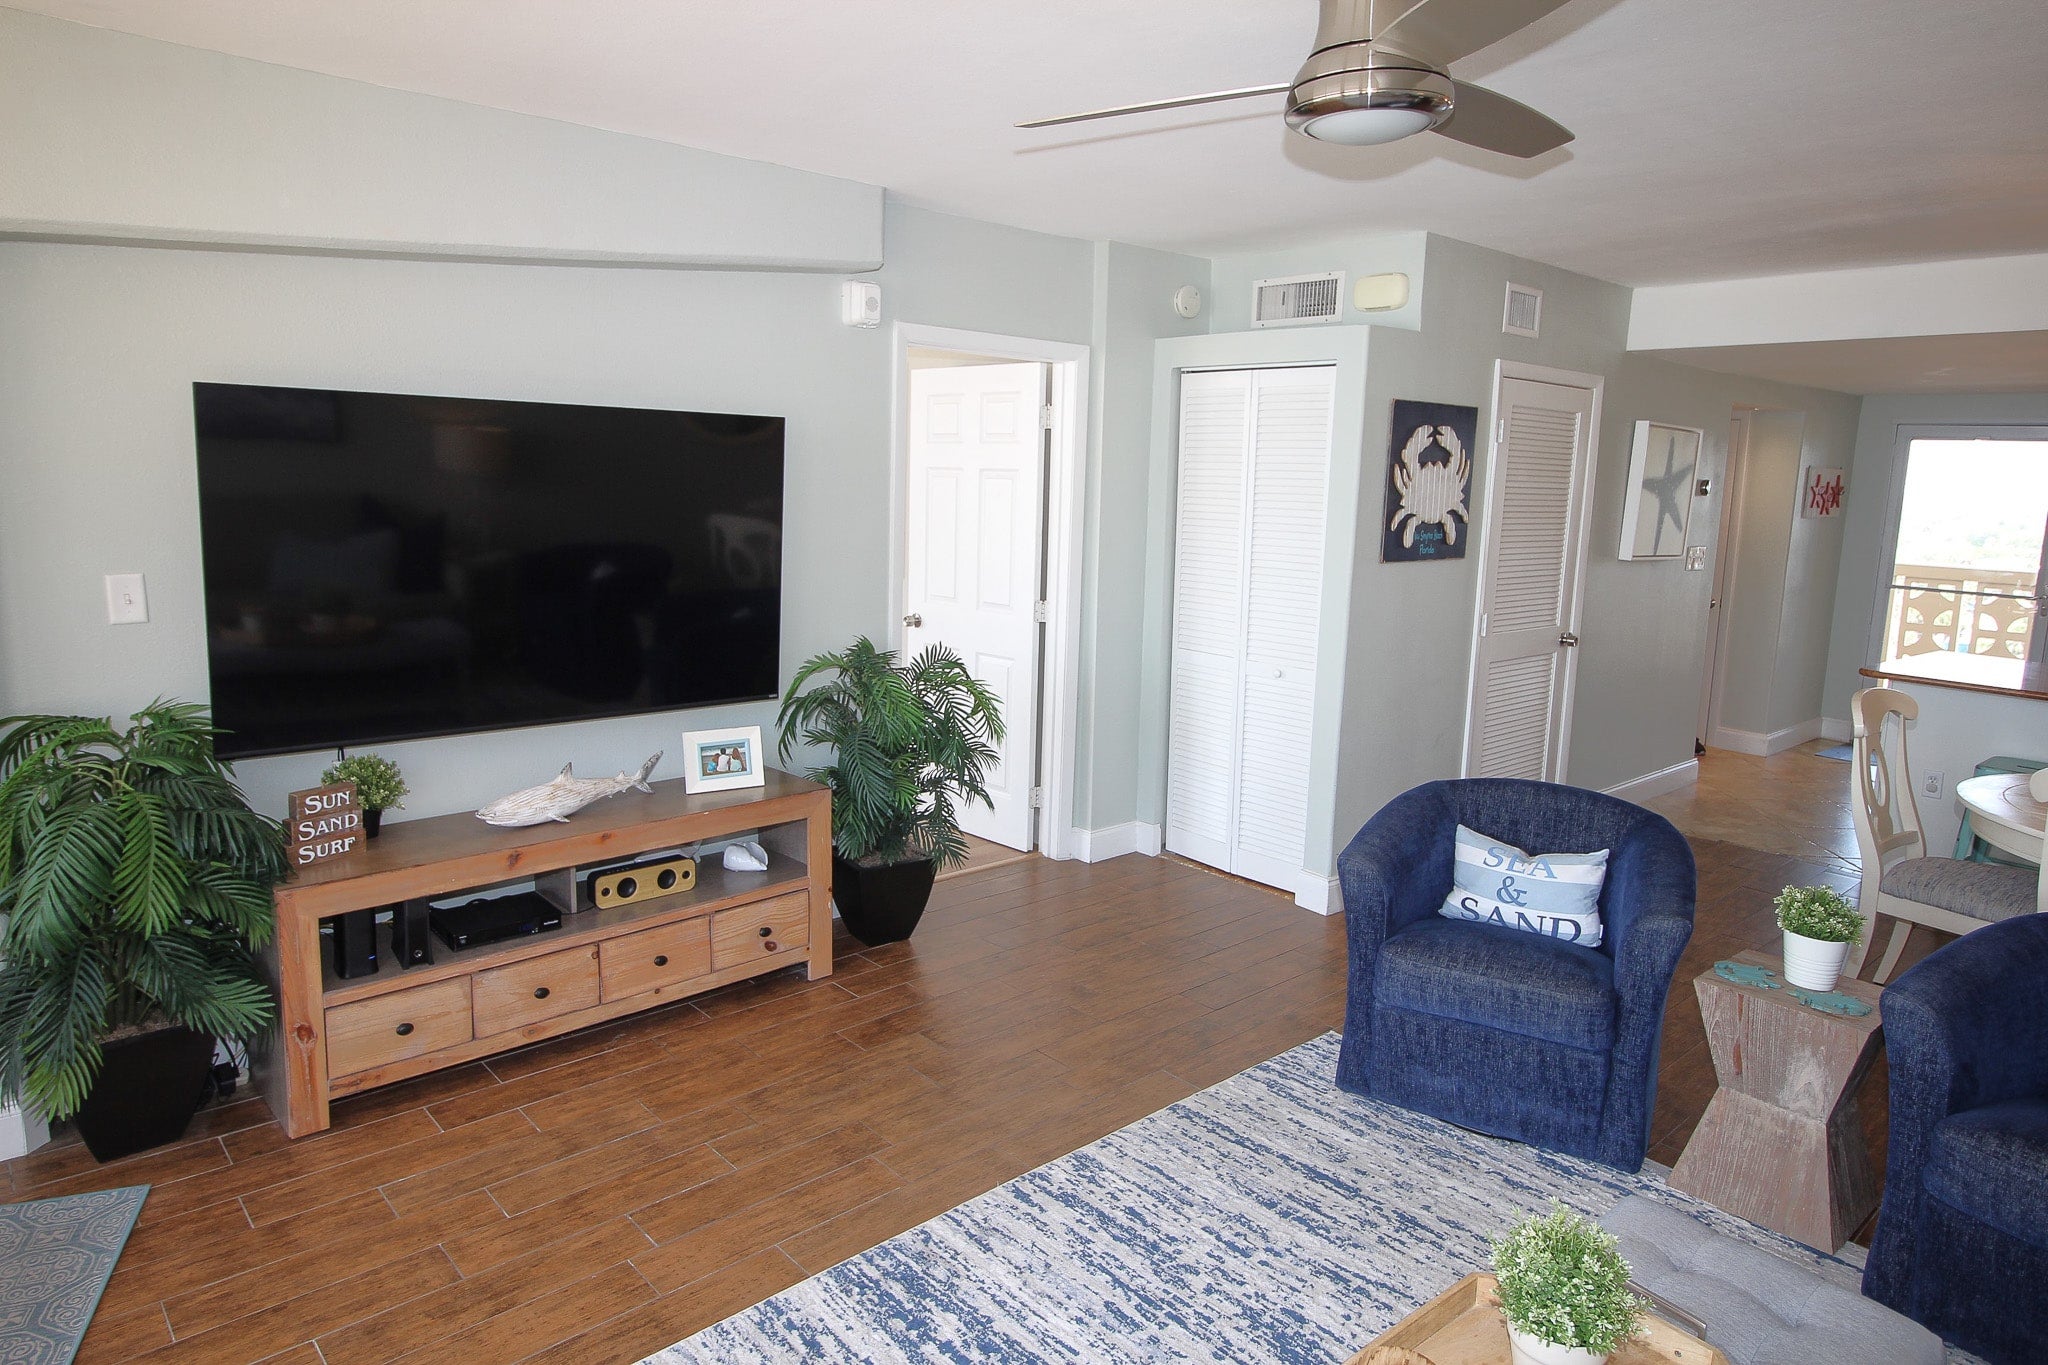 Large Smart TV in Living Room